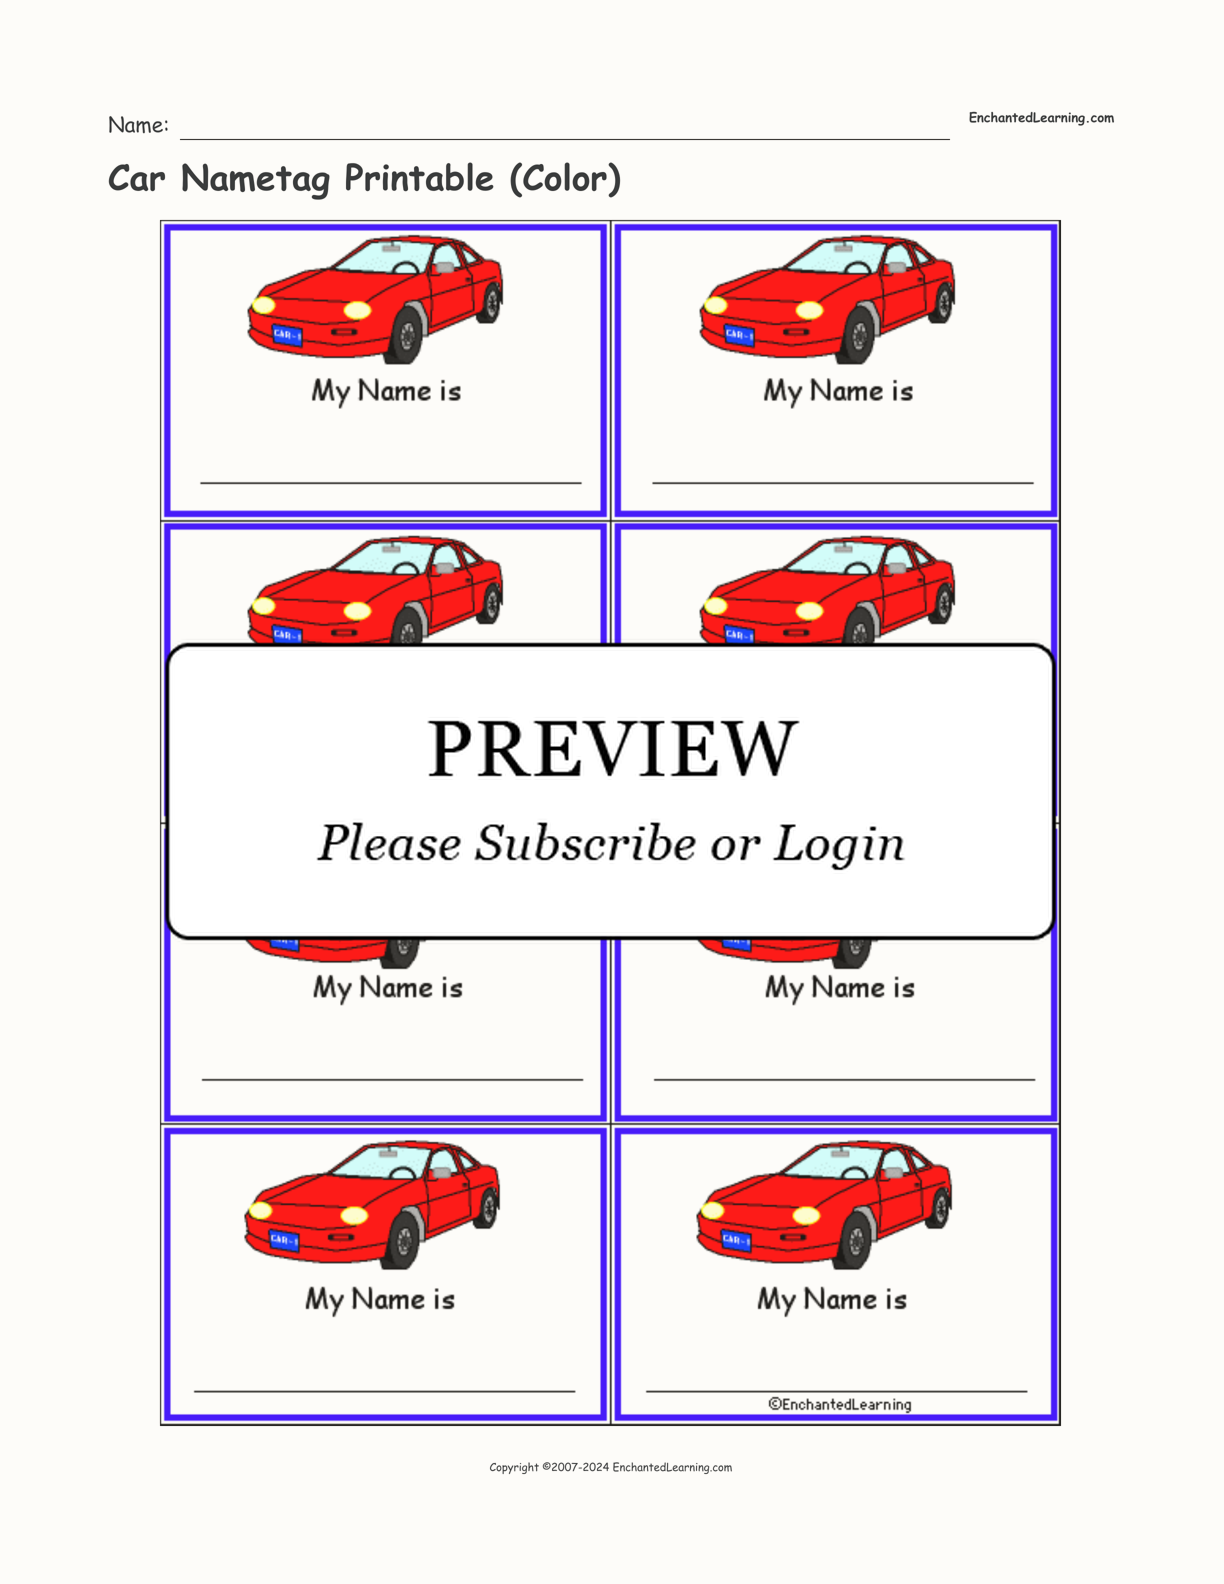 Car Nametag Printable (Color) interactive printout page 1